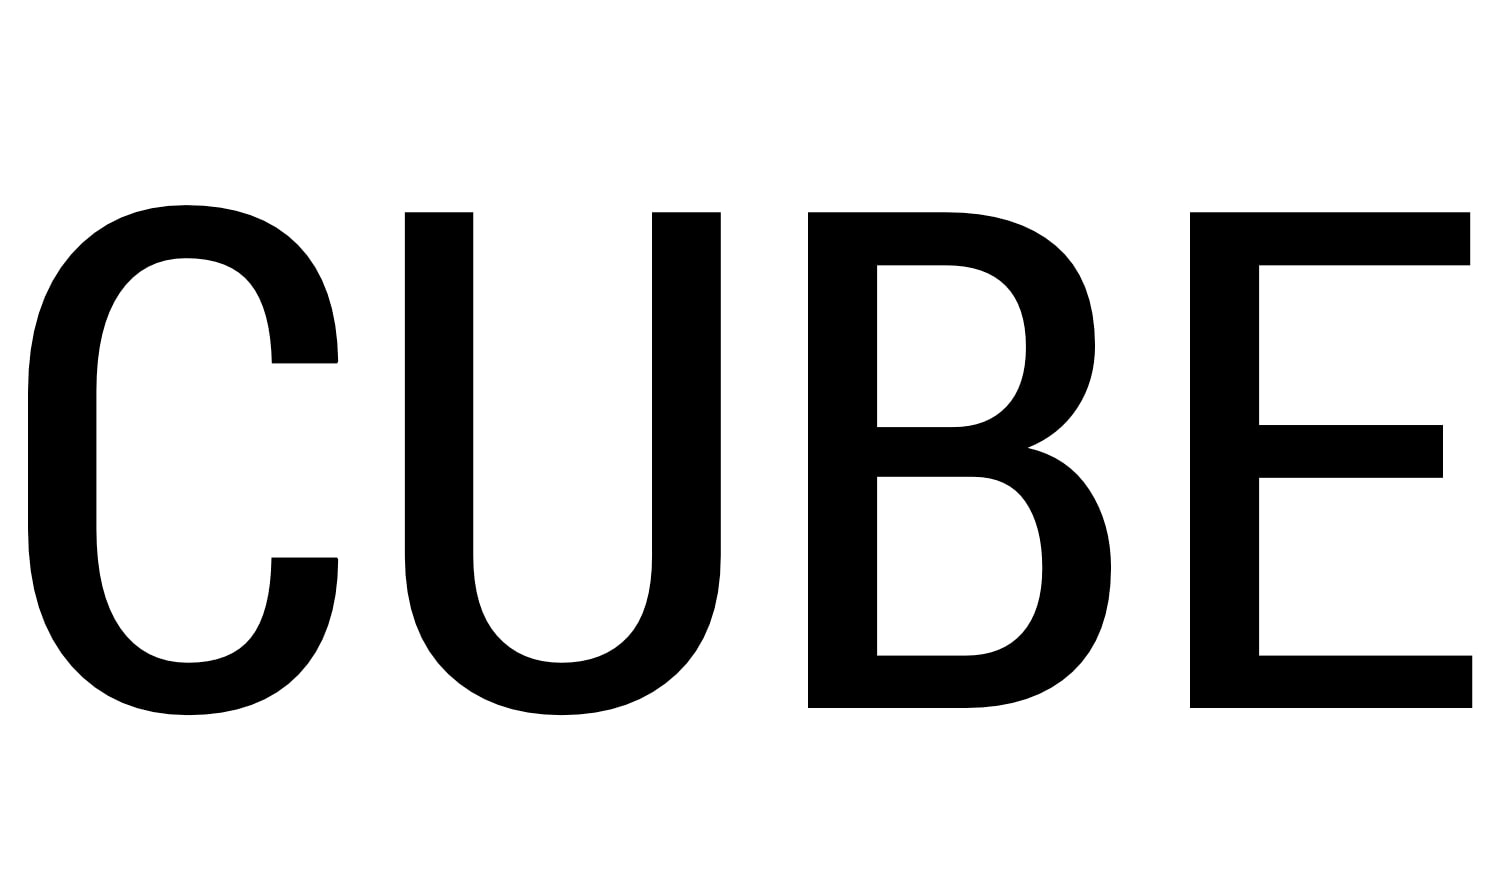 cube logo